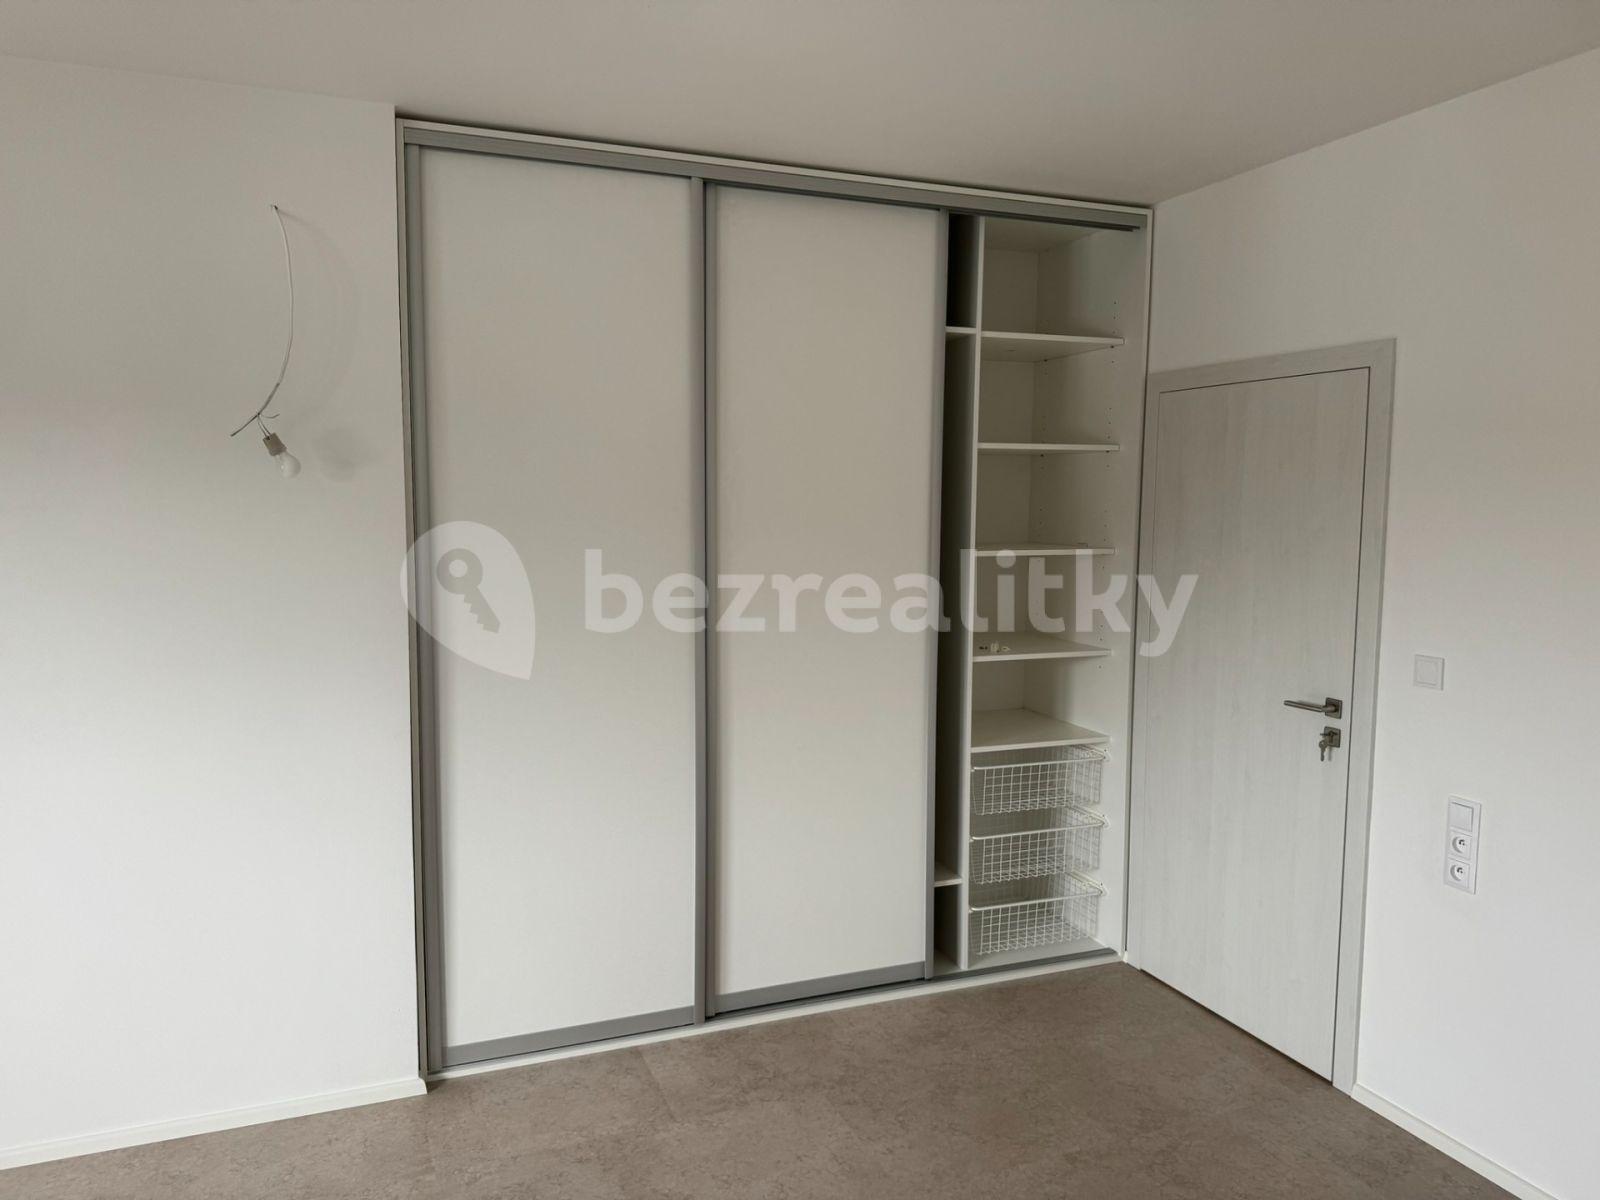 3 bedroom flat to rent, 96 m², Listopadová, Prague, Prague